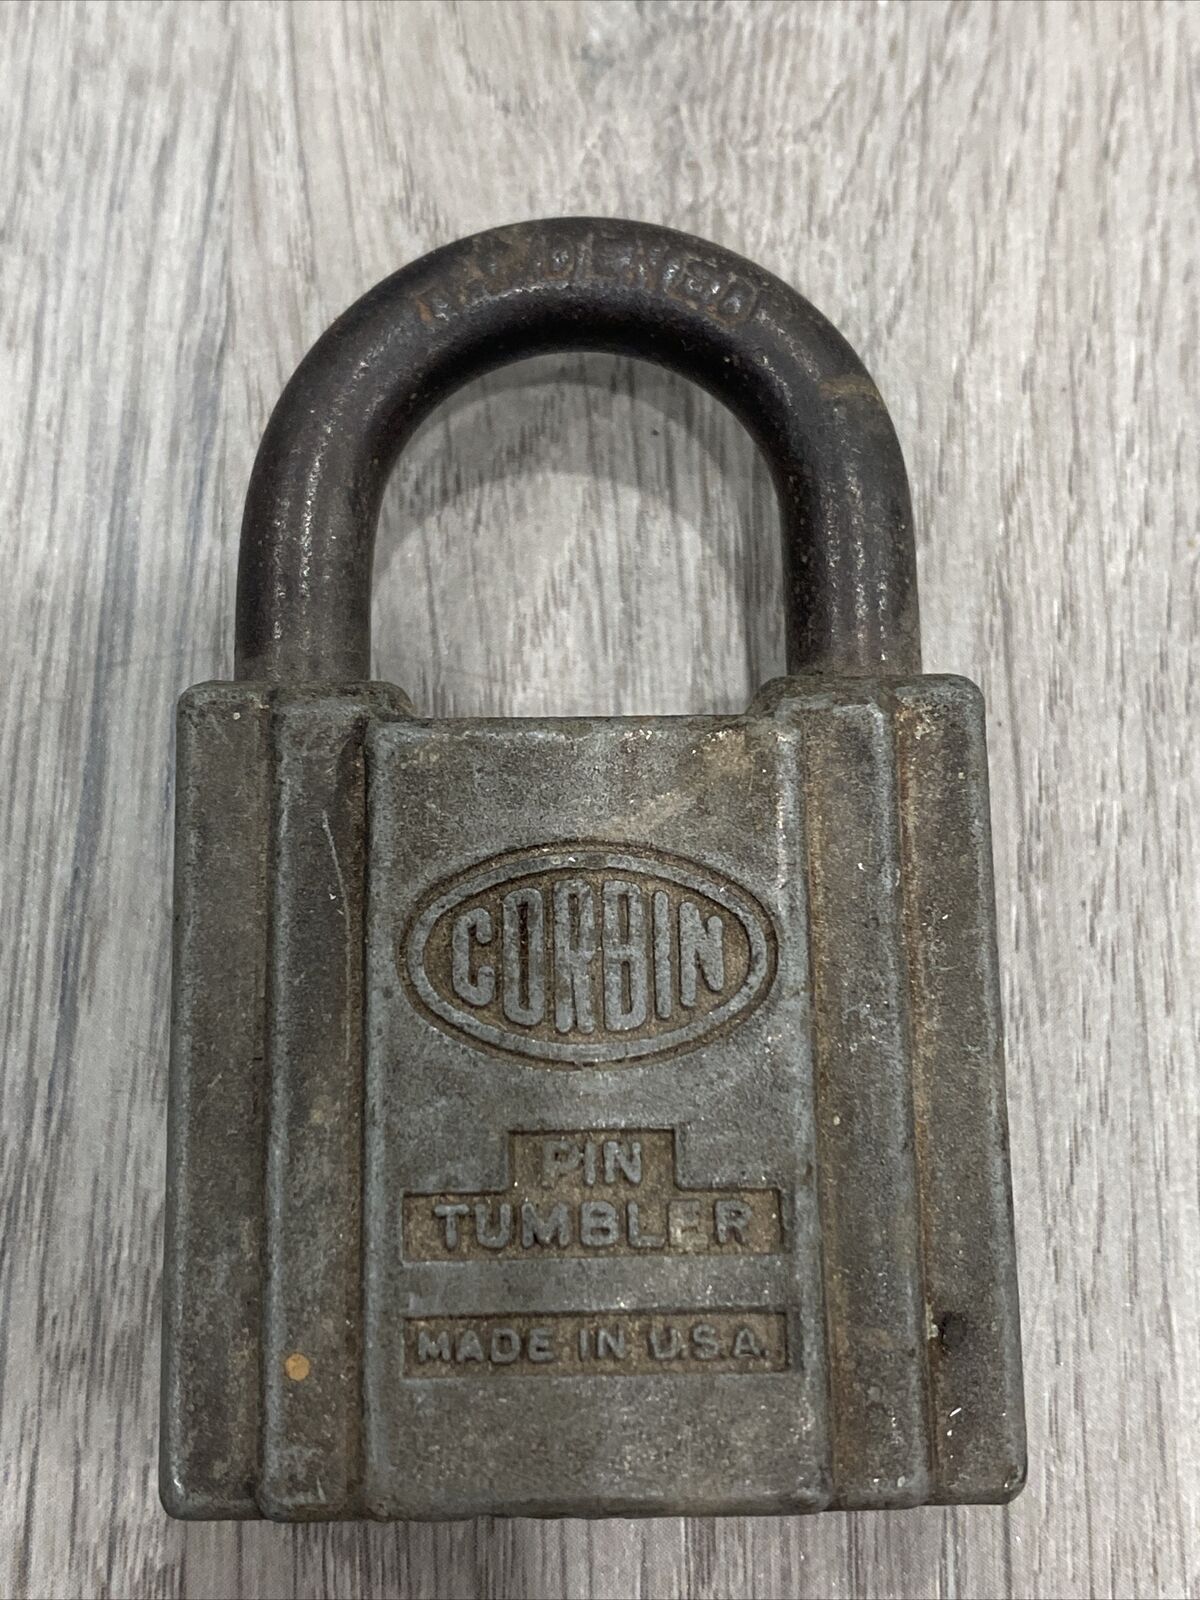 VINTAGE CORBIN Pin Tumbler padlock lock Made in the U.S.A. No Key